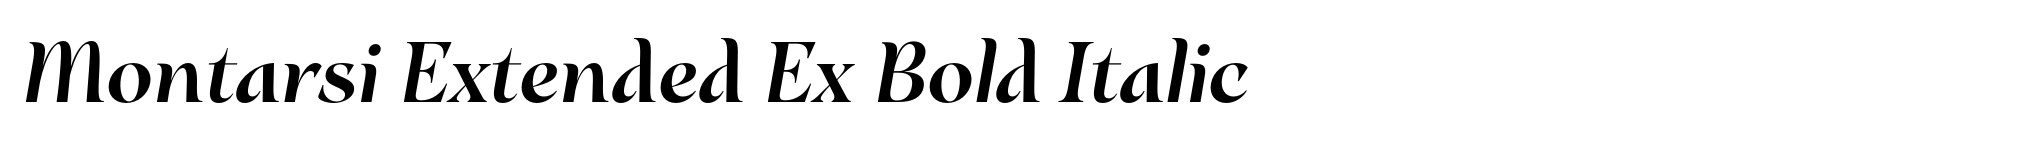 Montarsi Extended Ex Bold Italic image